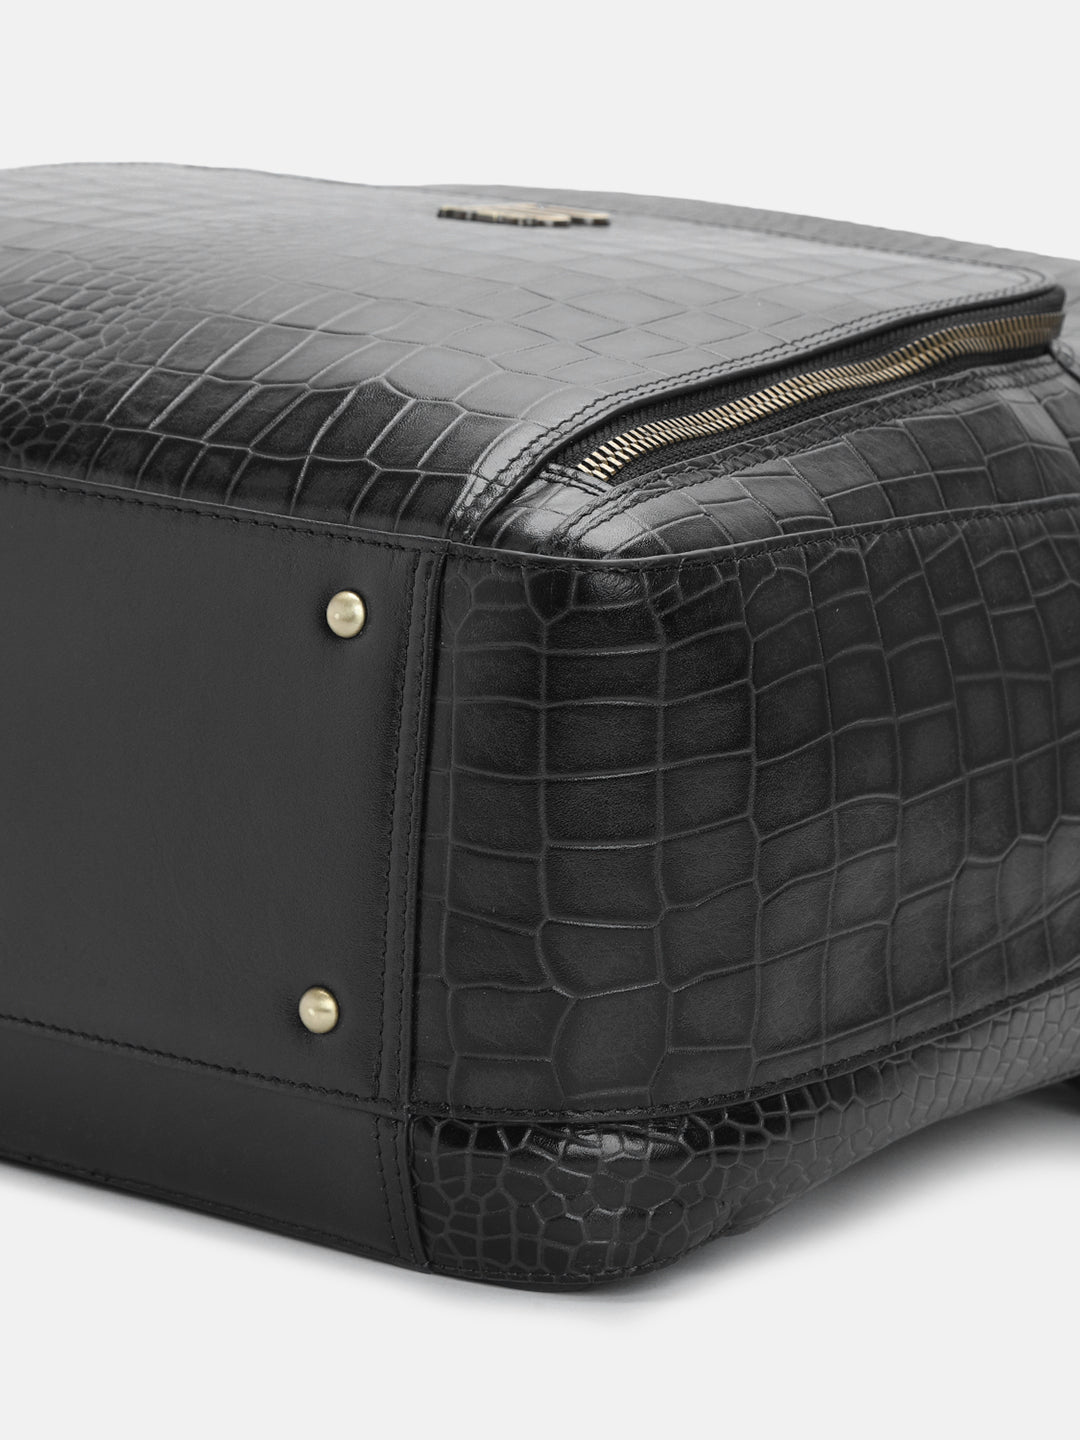 BAGATT Solofra Black Leather Bagpack